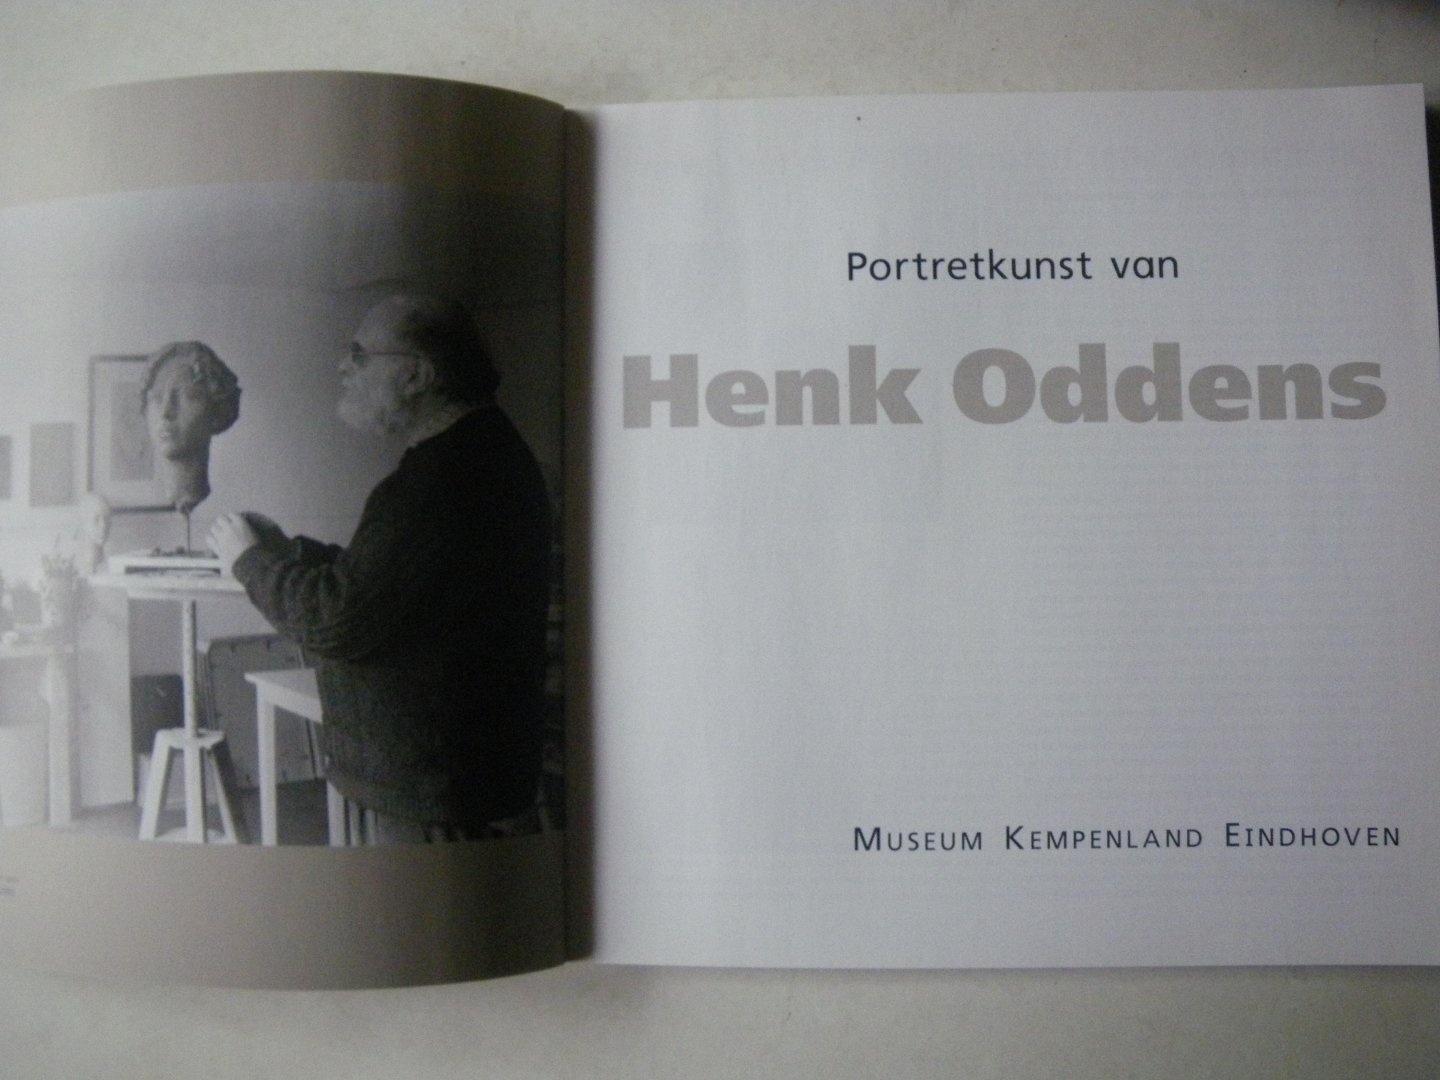 ODDENS,HENK. Catalogus 2000. - Portretkunst van Henk Oddens.